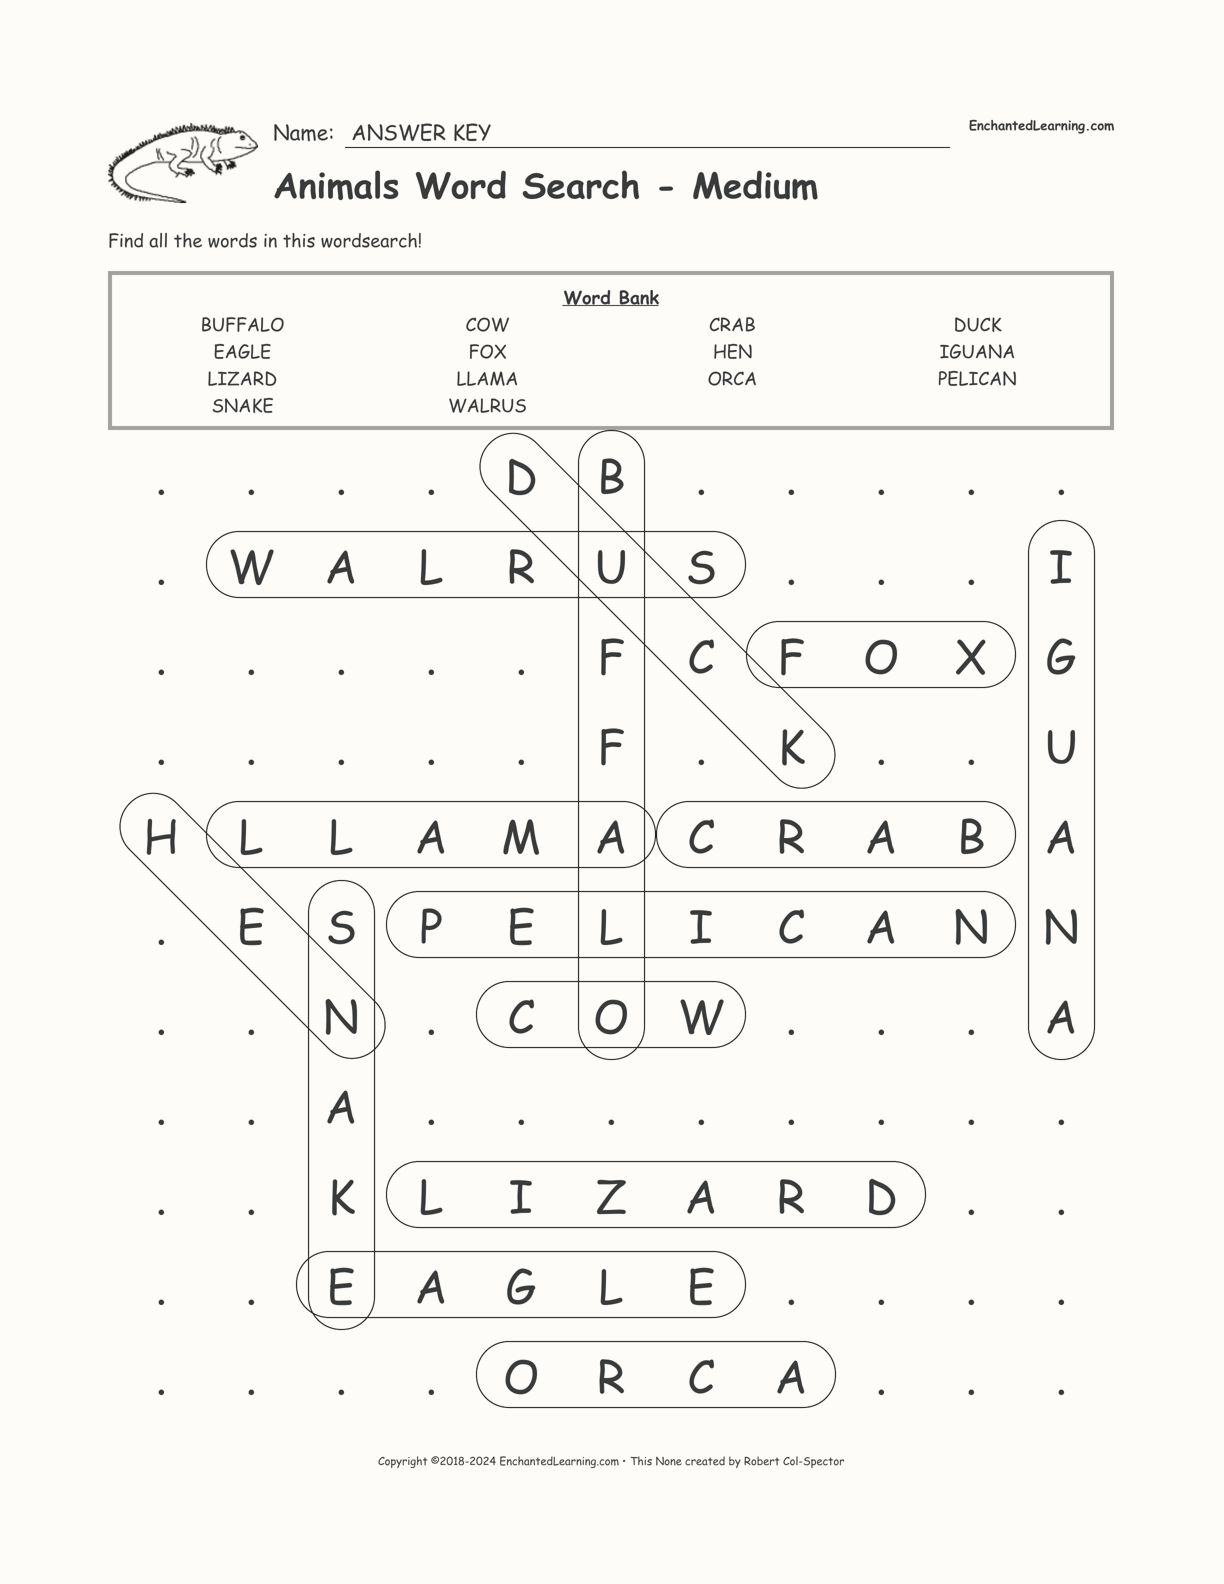 Animals Word Search - Medium interactive worksheet page 2